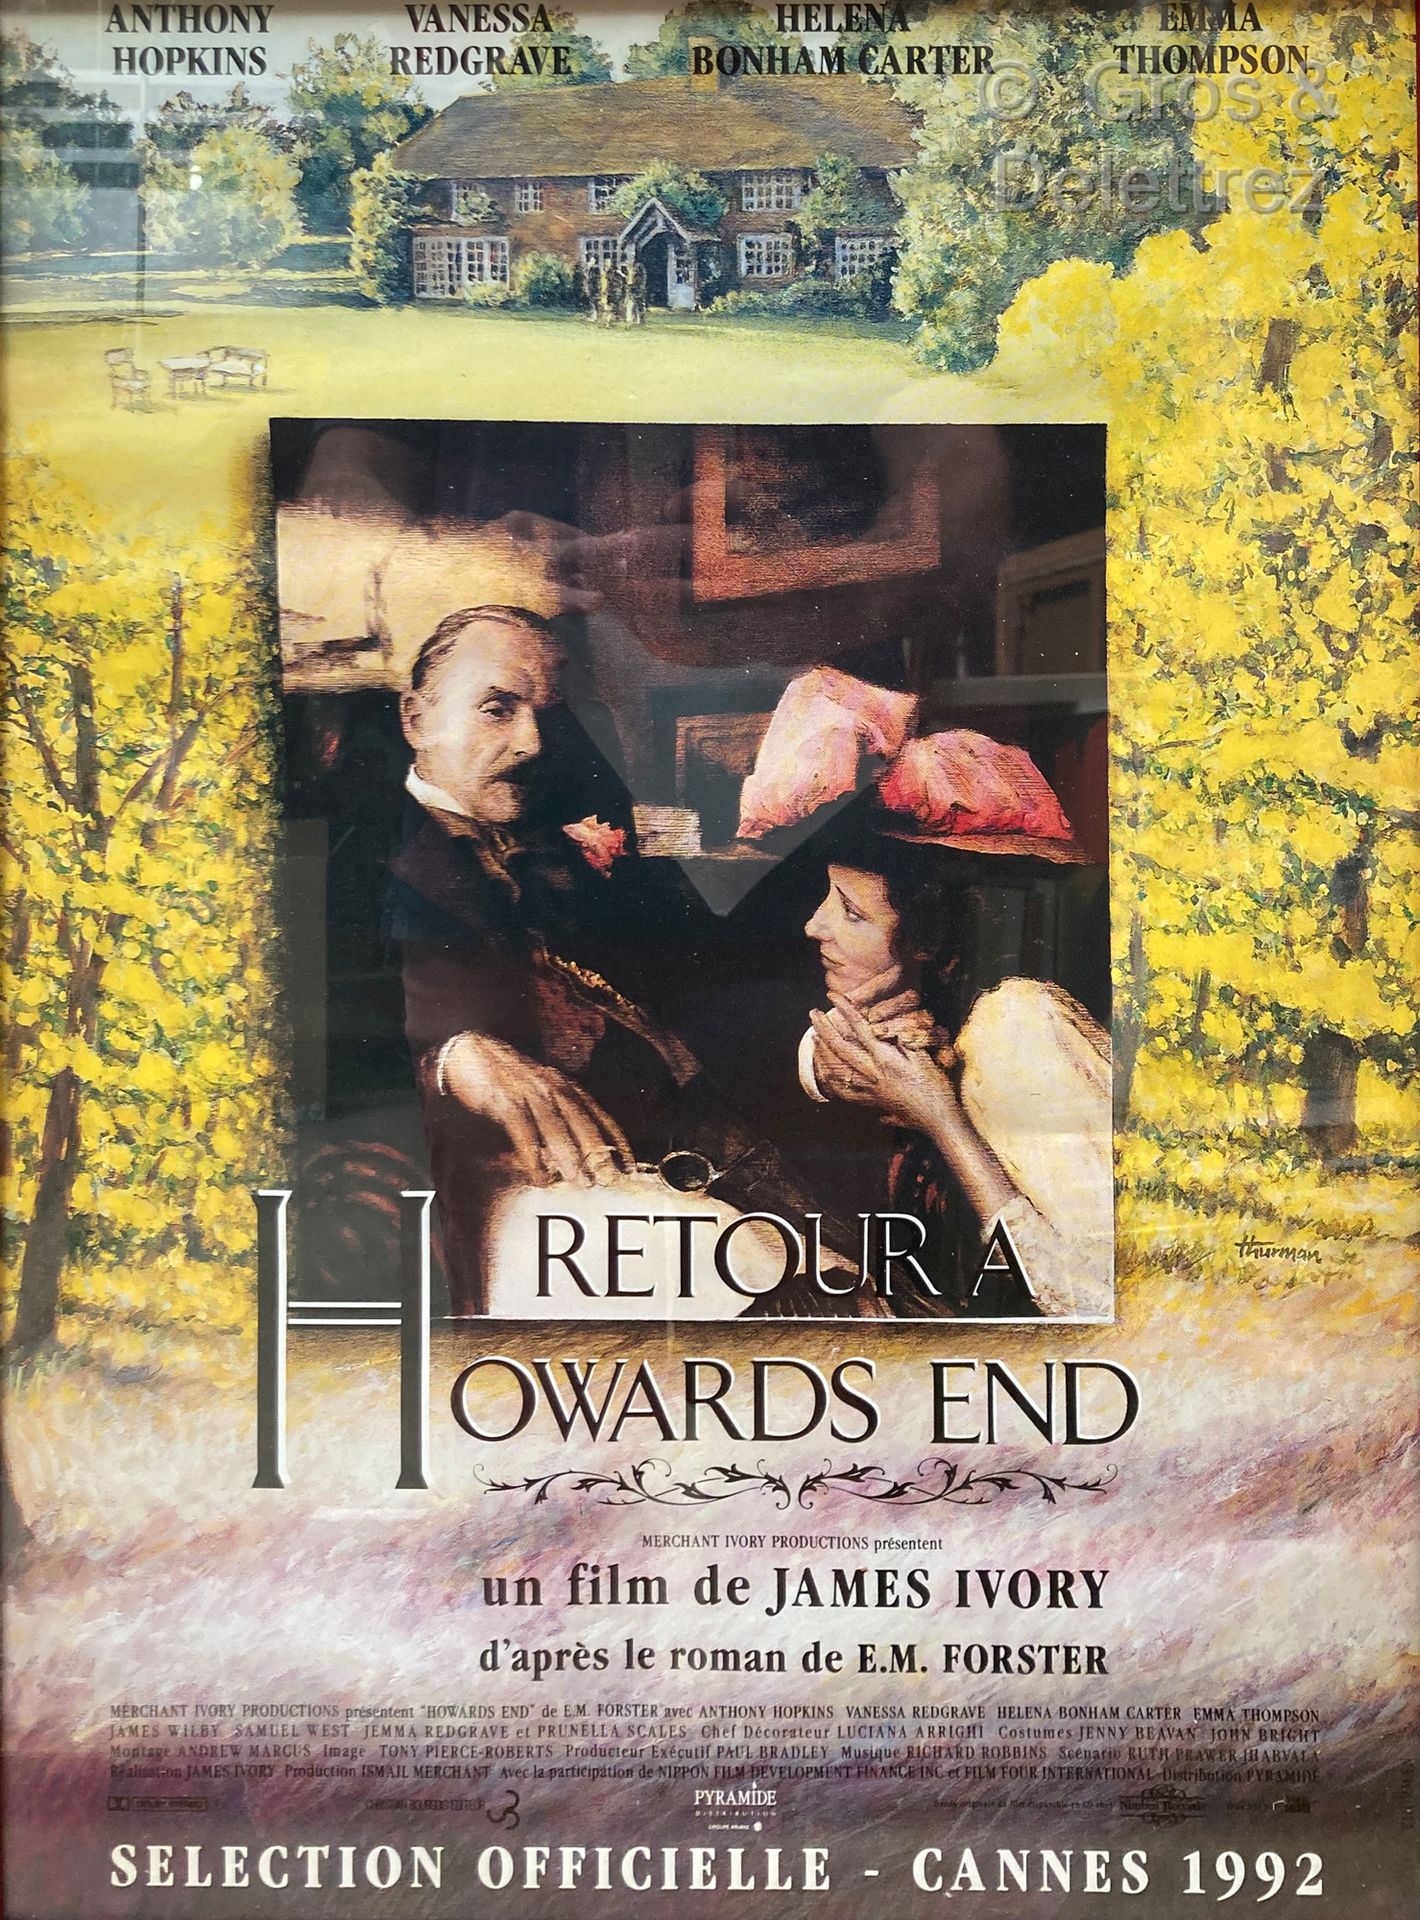 James IVORY 返回霍华德庄园

电影海报

54 x 39 cm 玻璃下